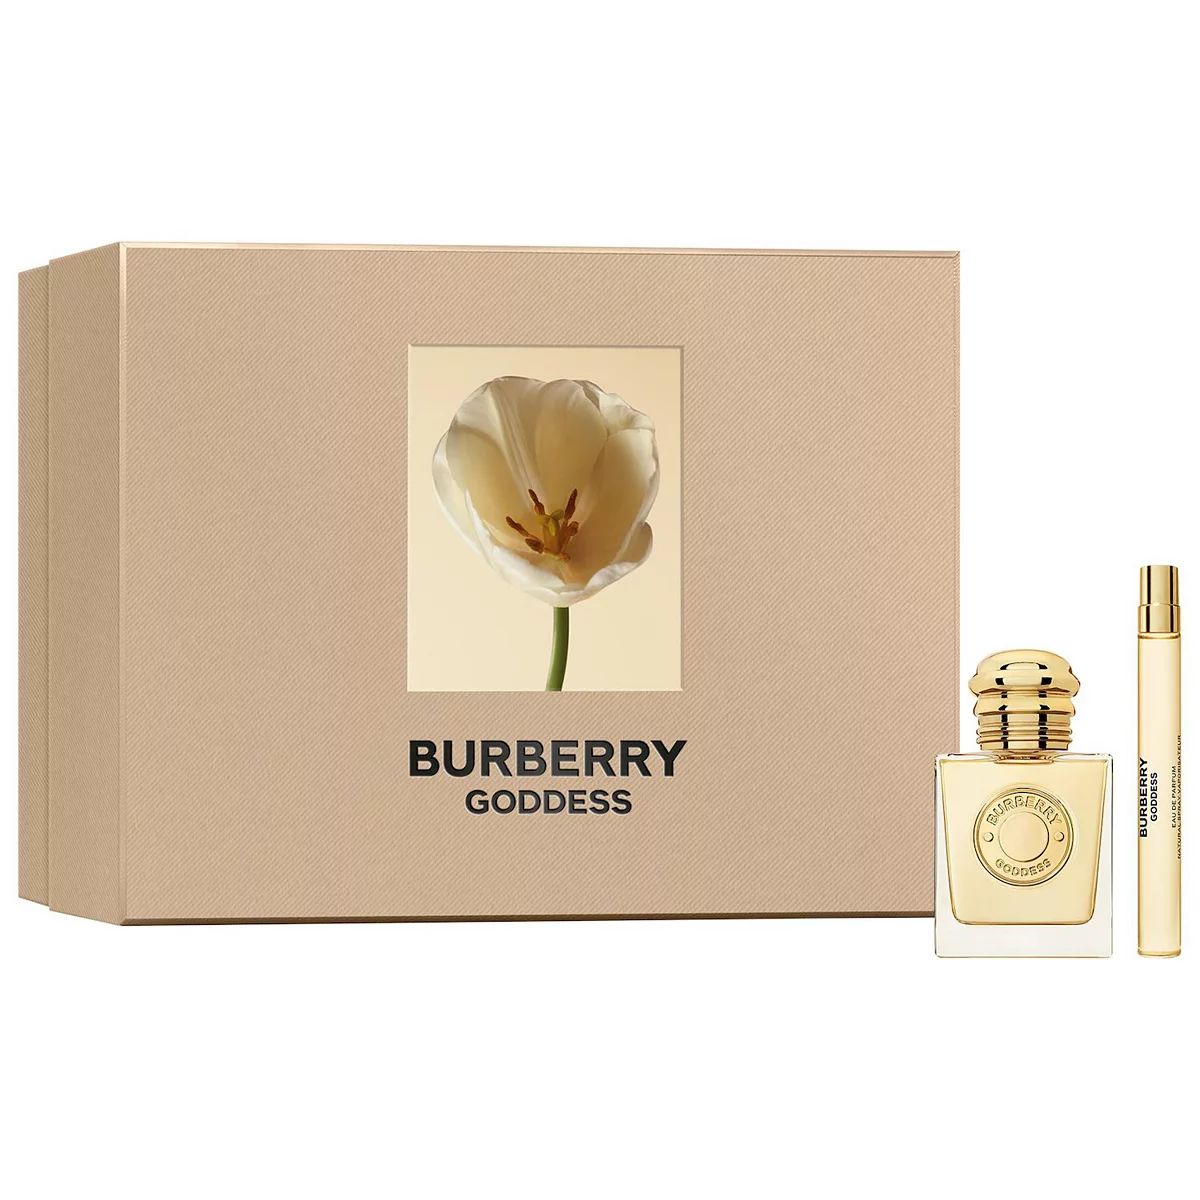 Burberry Goddess Eau de Parfum Gift Set | Kohl's